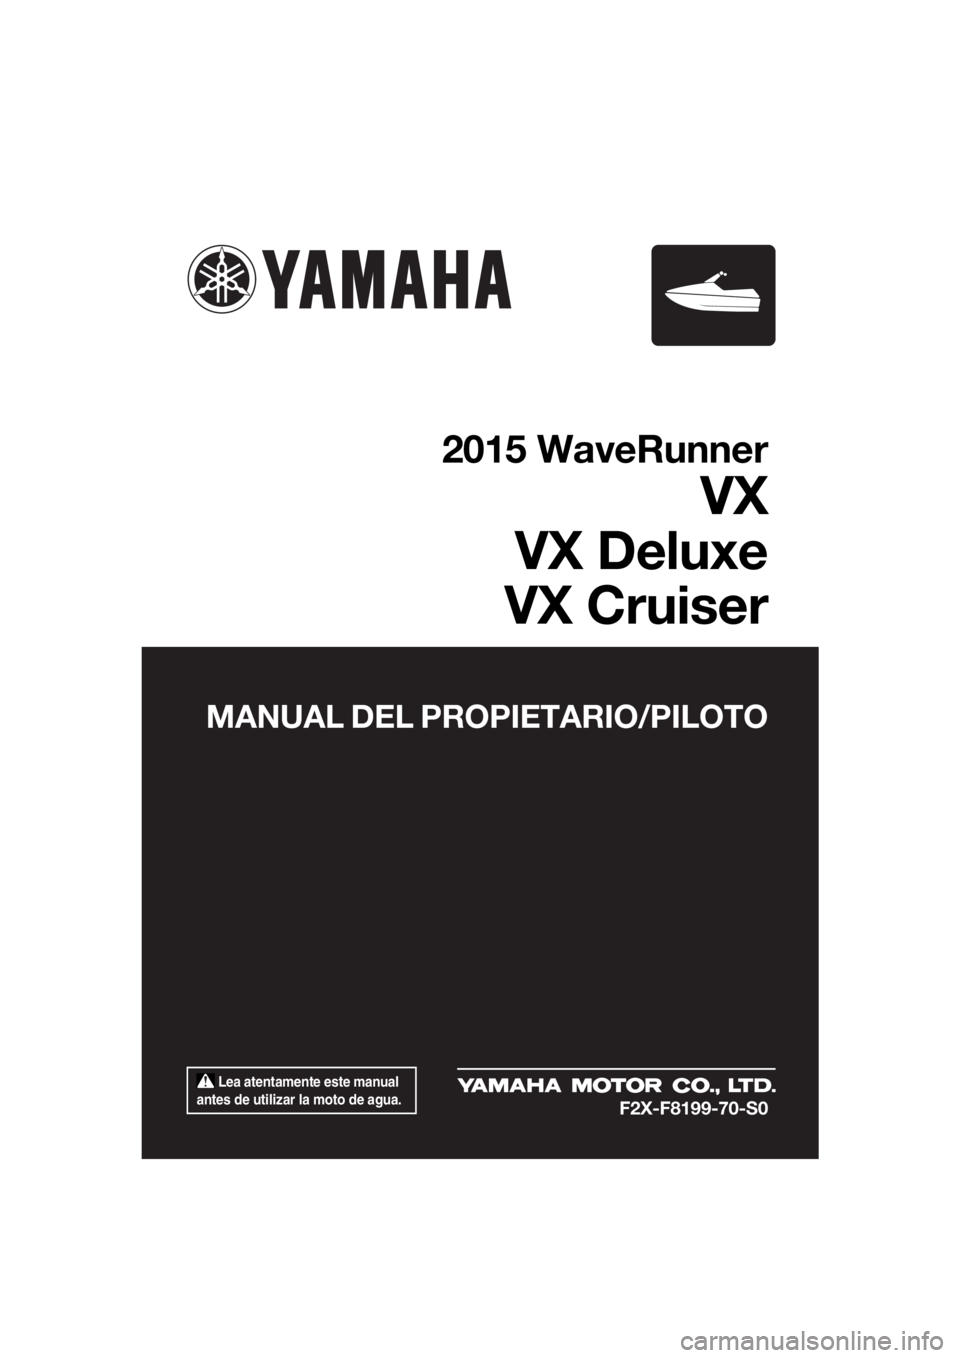 YAMAHA VX CRUISER 2015  Manuale de Empleo (in Spanish) 